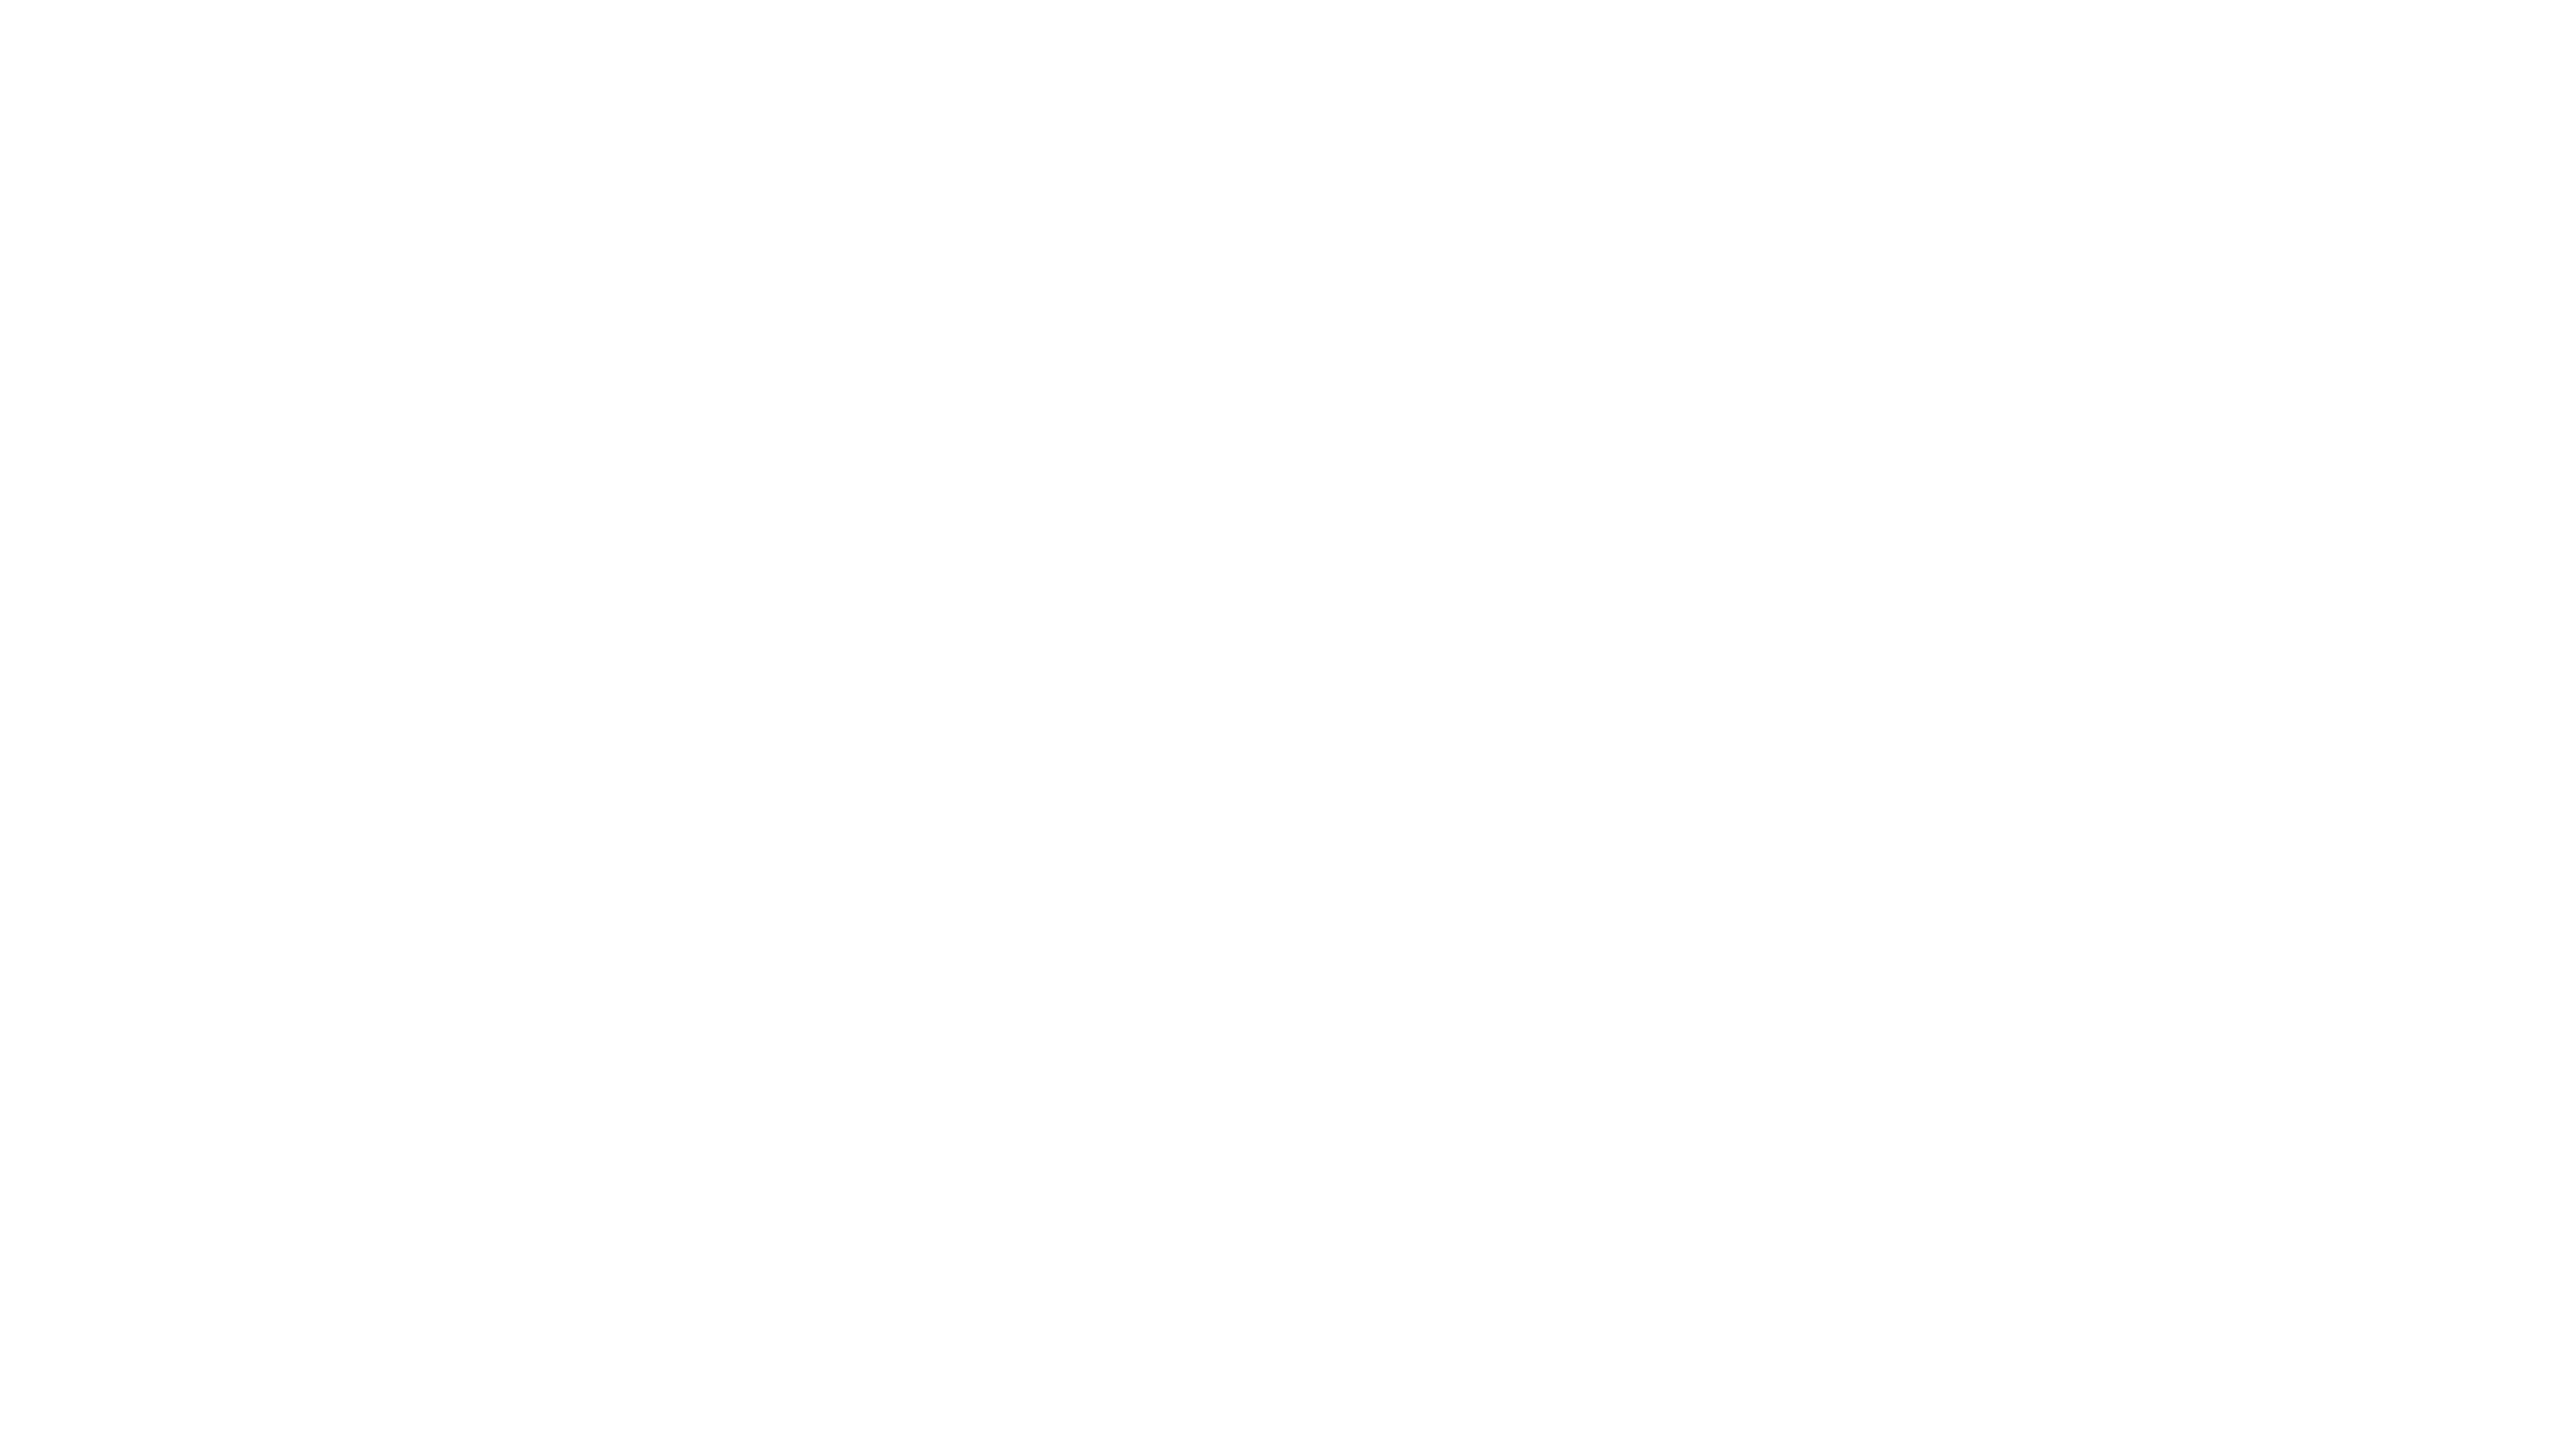 Aromatic tert-Butylations